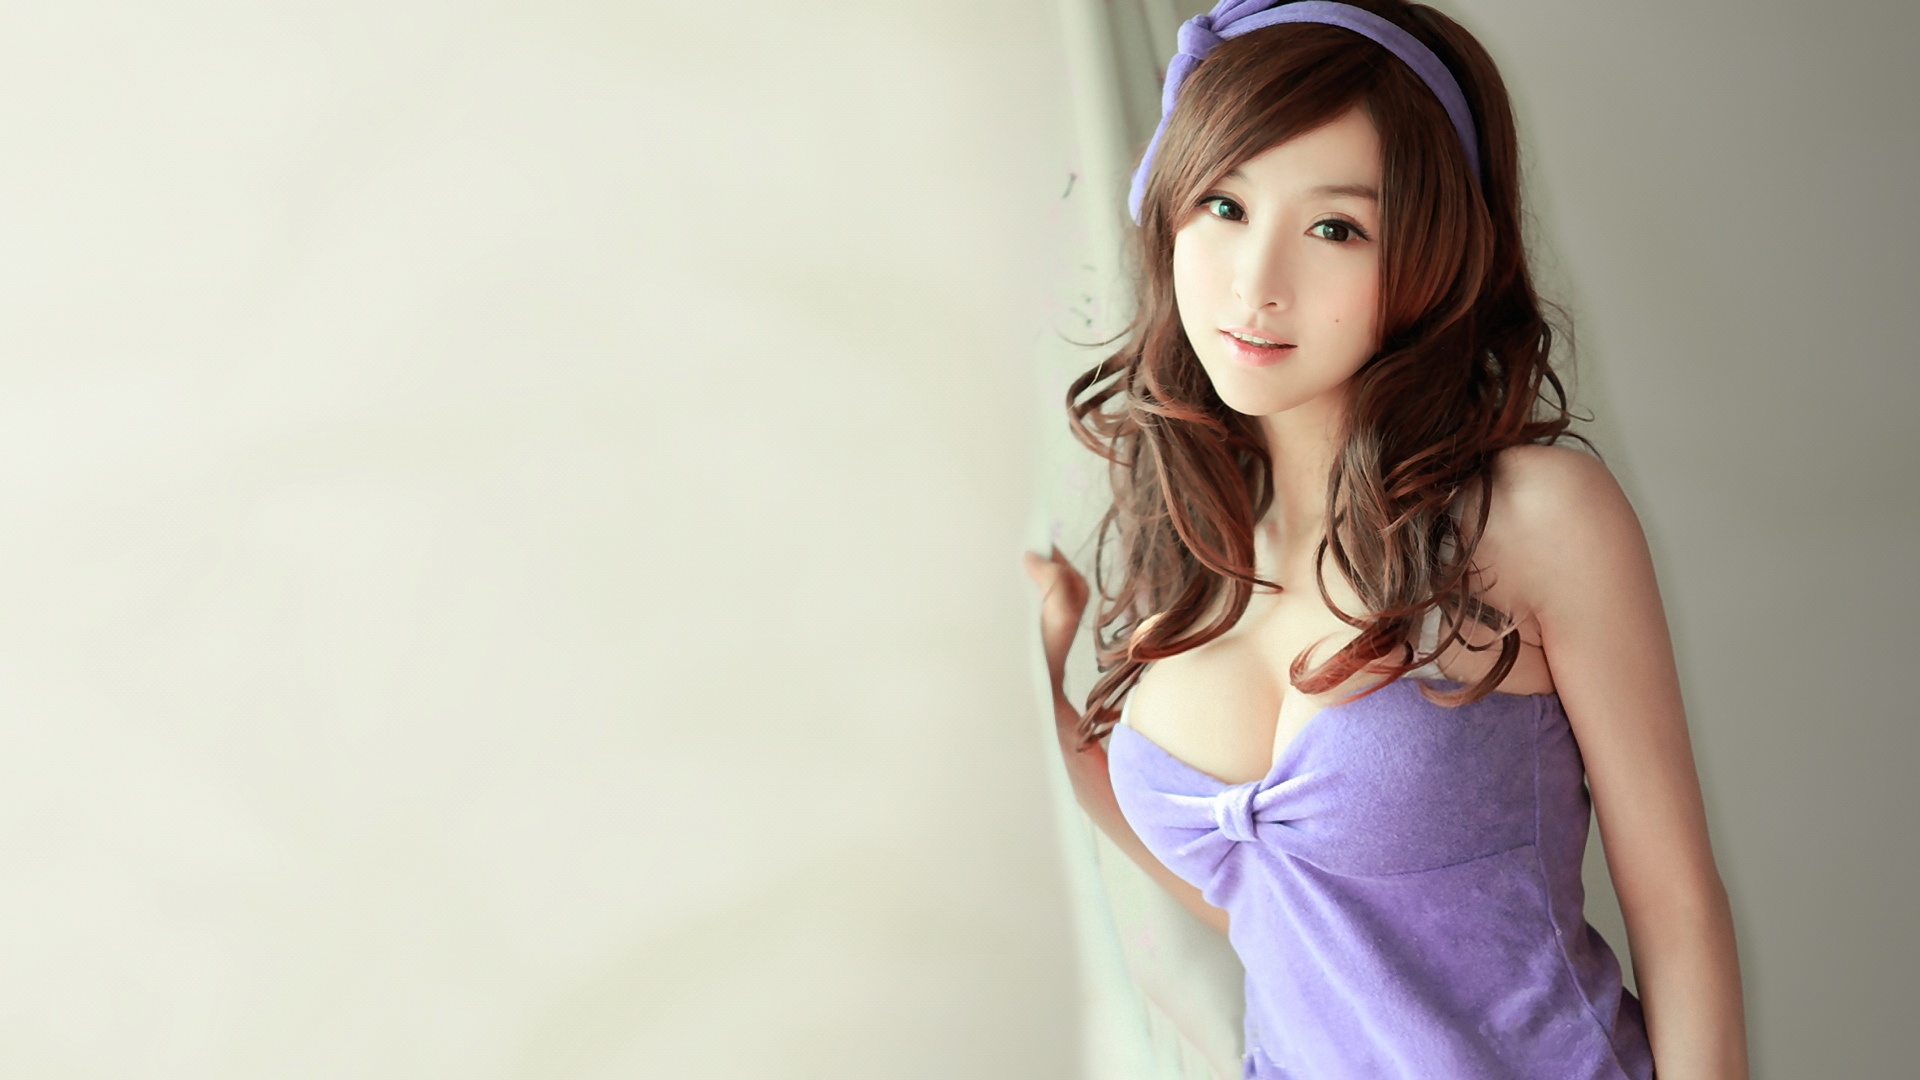 Top 11 Cute Asian Girls and Beautiful Windows Wallpapers